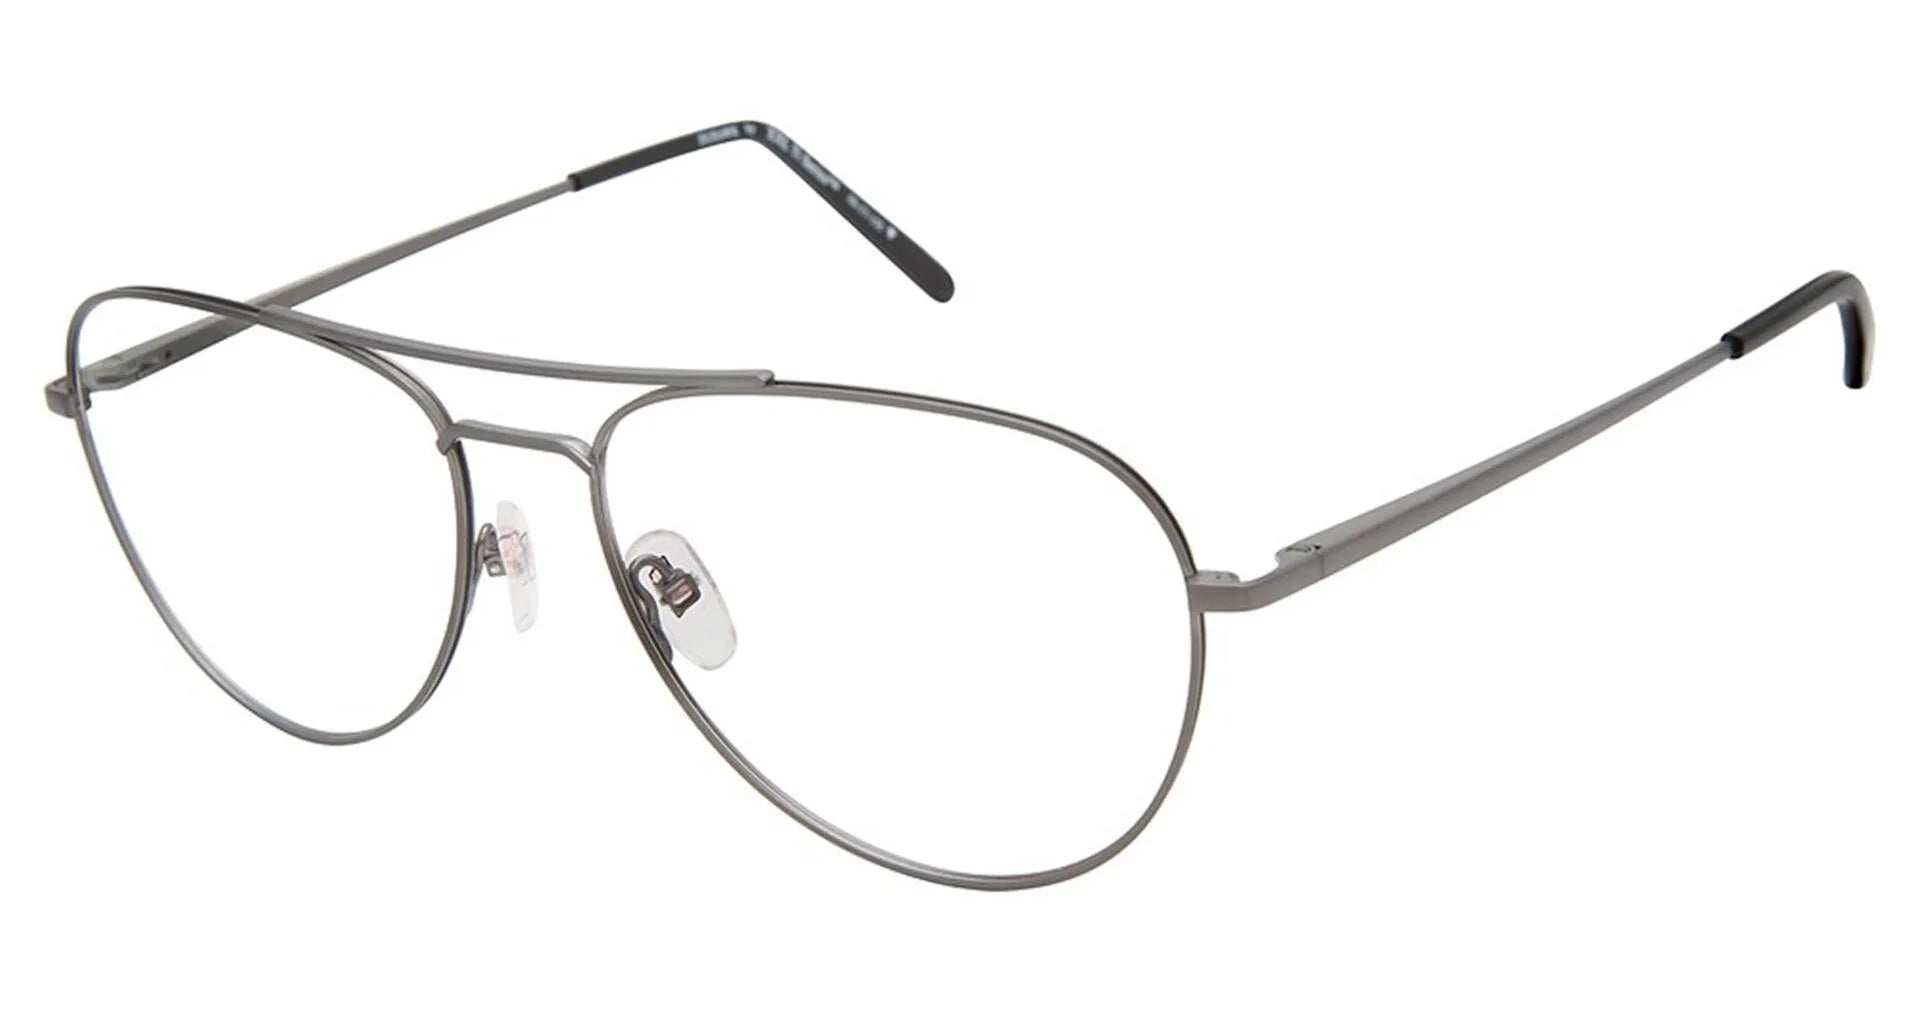 XXL Eyewear Duhawk Eyeglasses Gunmetal